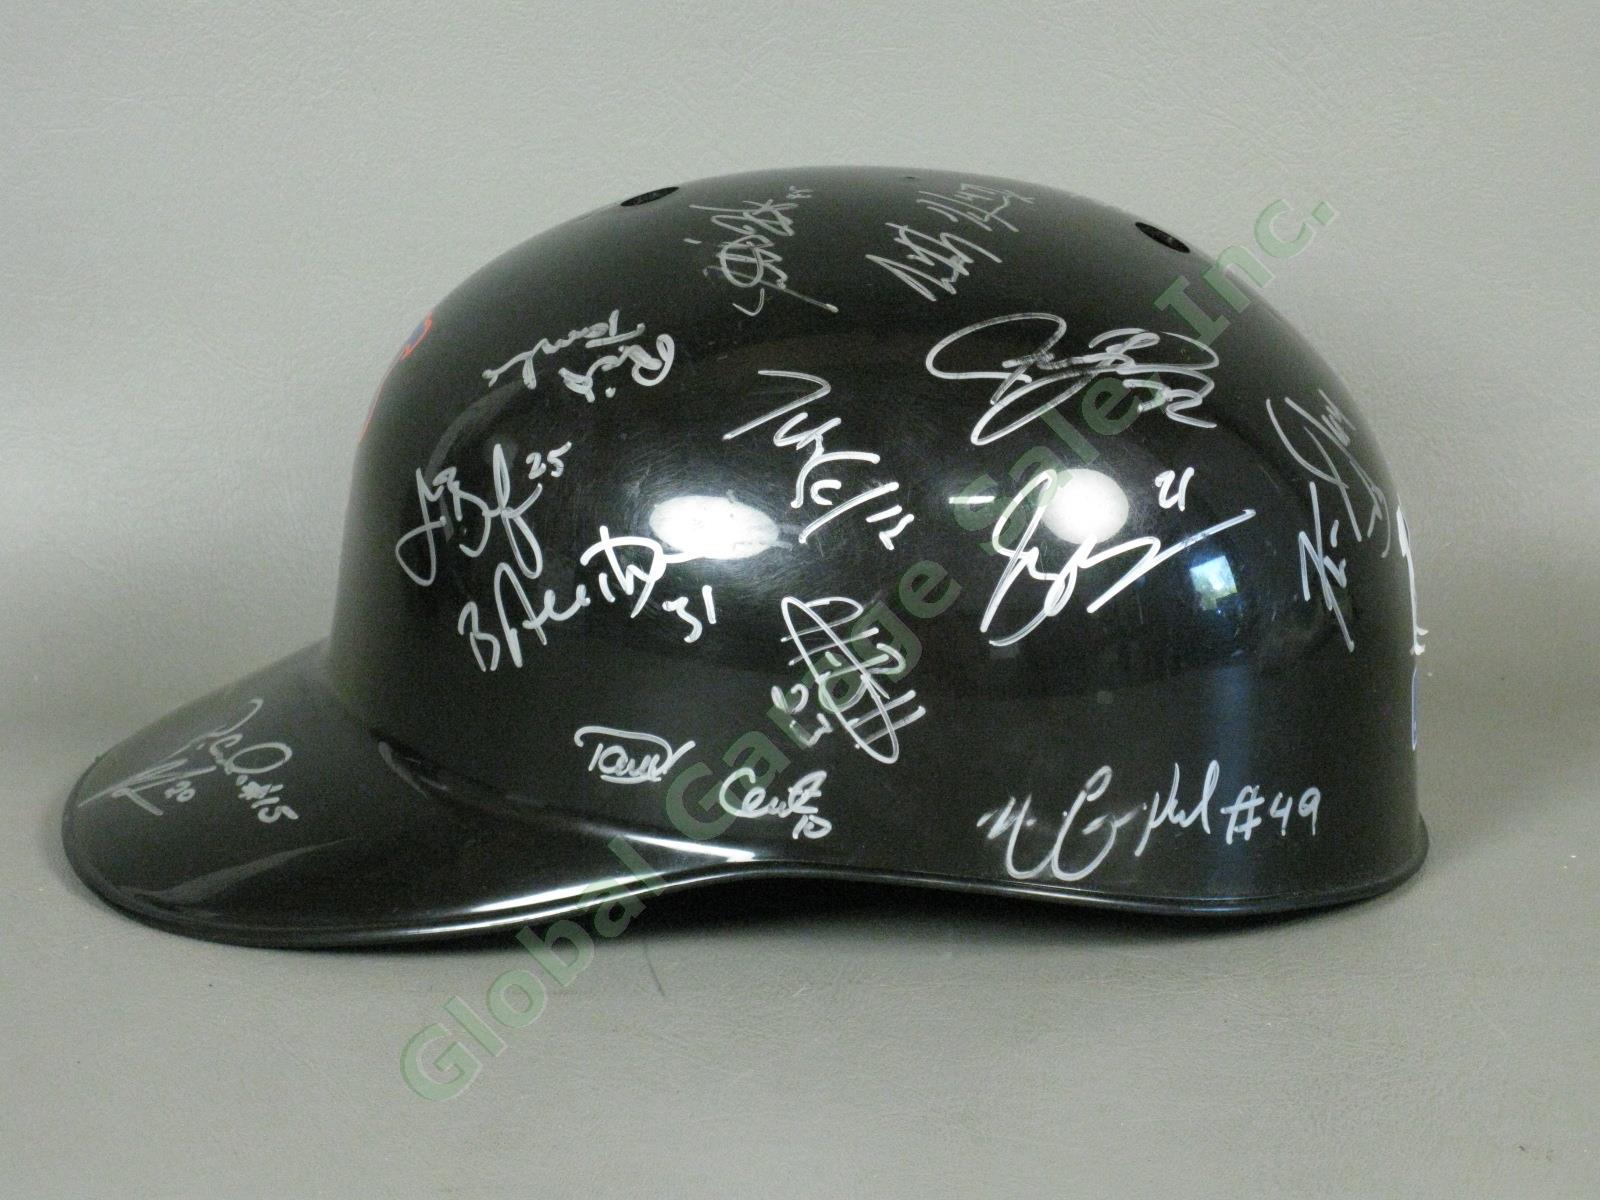 2010 Brooklyn Cyclones Team Signed Baseball Helmet MiLB MLB NYPL New York Mets 3